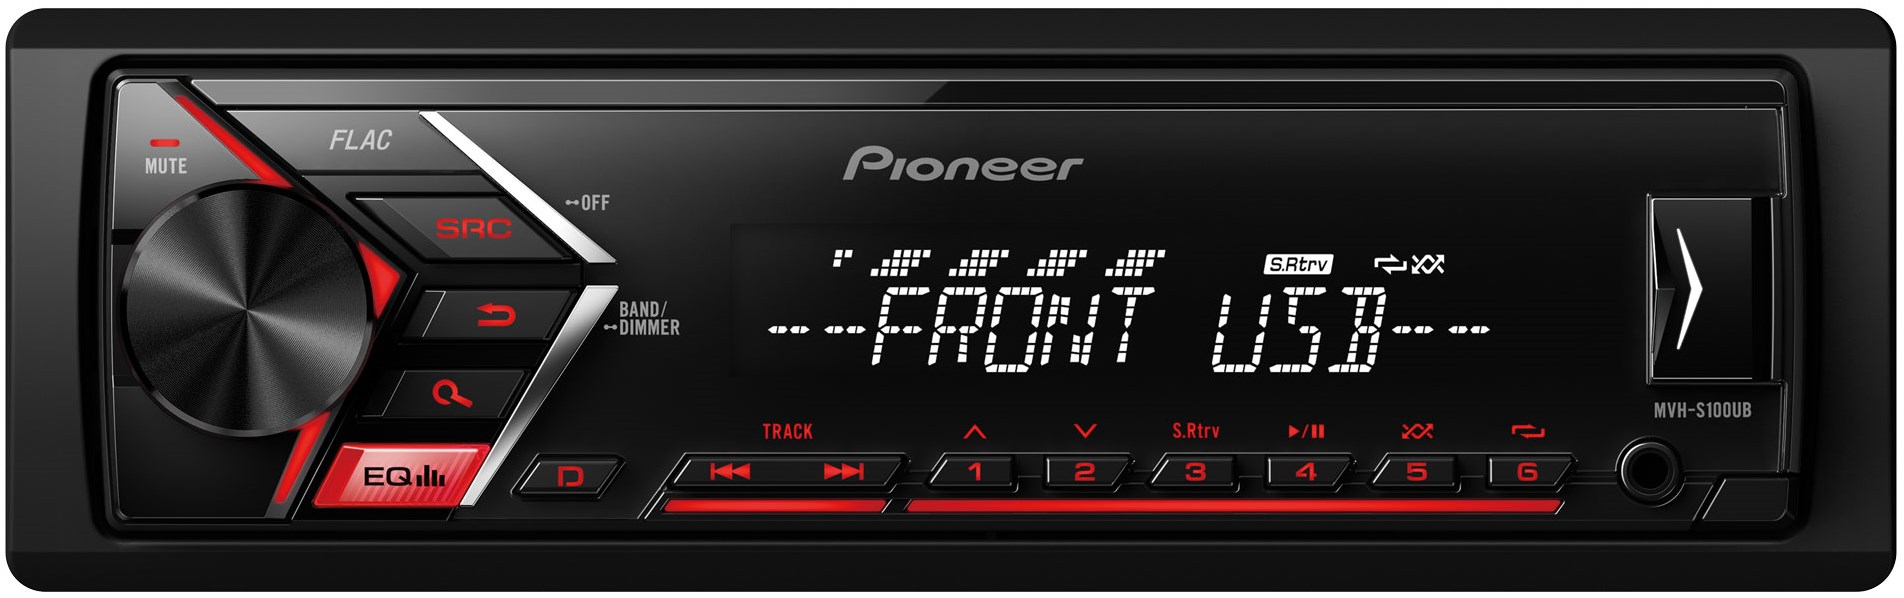 Pioneer MVH-S100UB Car radio MVHS100UB